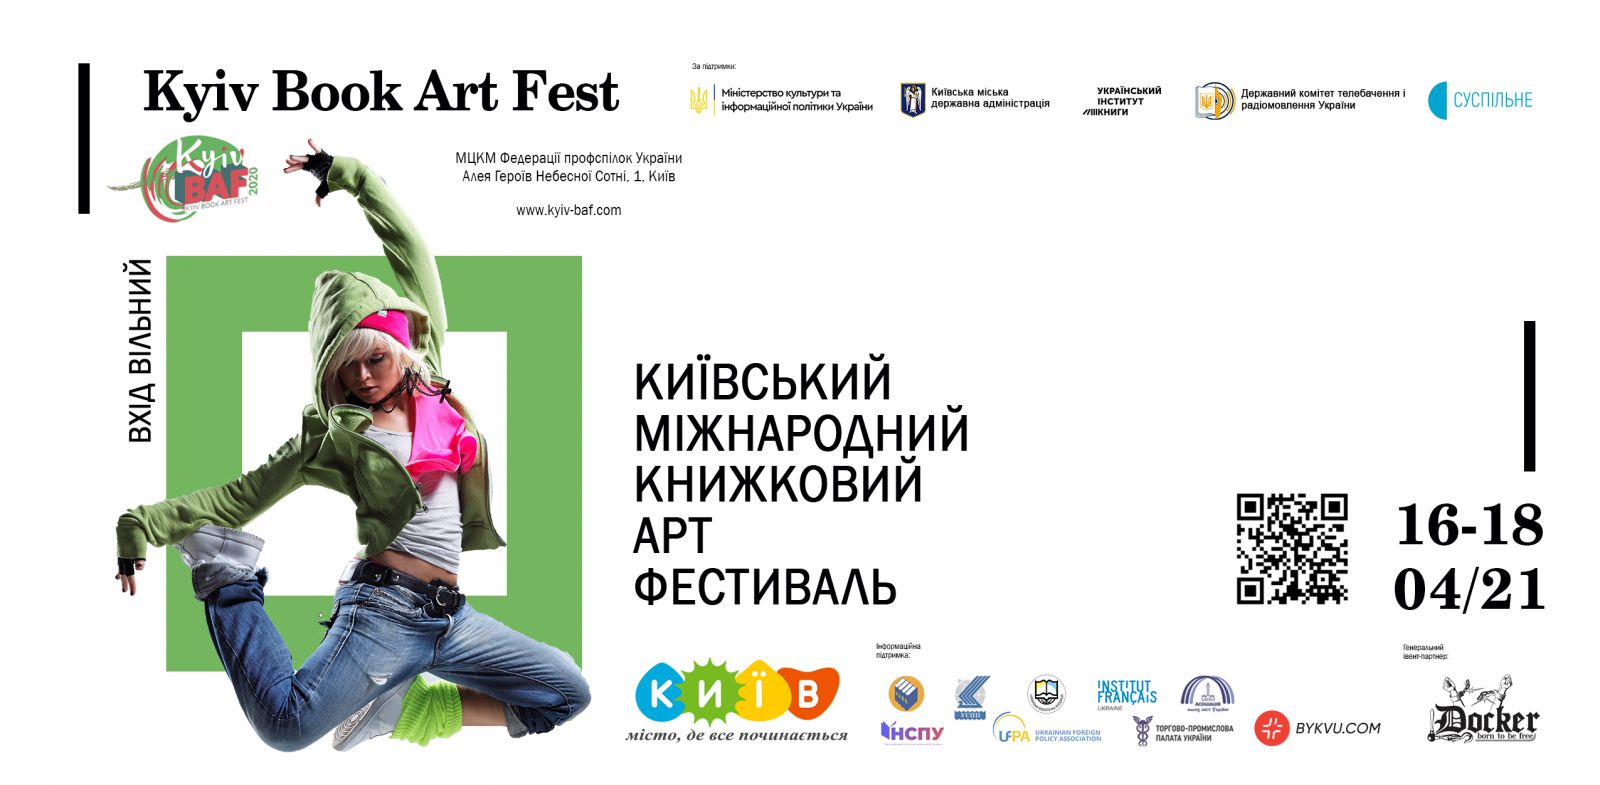 Tickets to "Kyiv Book Art Fest 2020" 16 — 18 April 2021 (Ukraine, Kyiv)